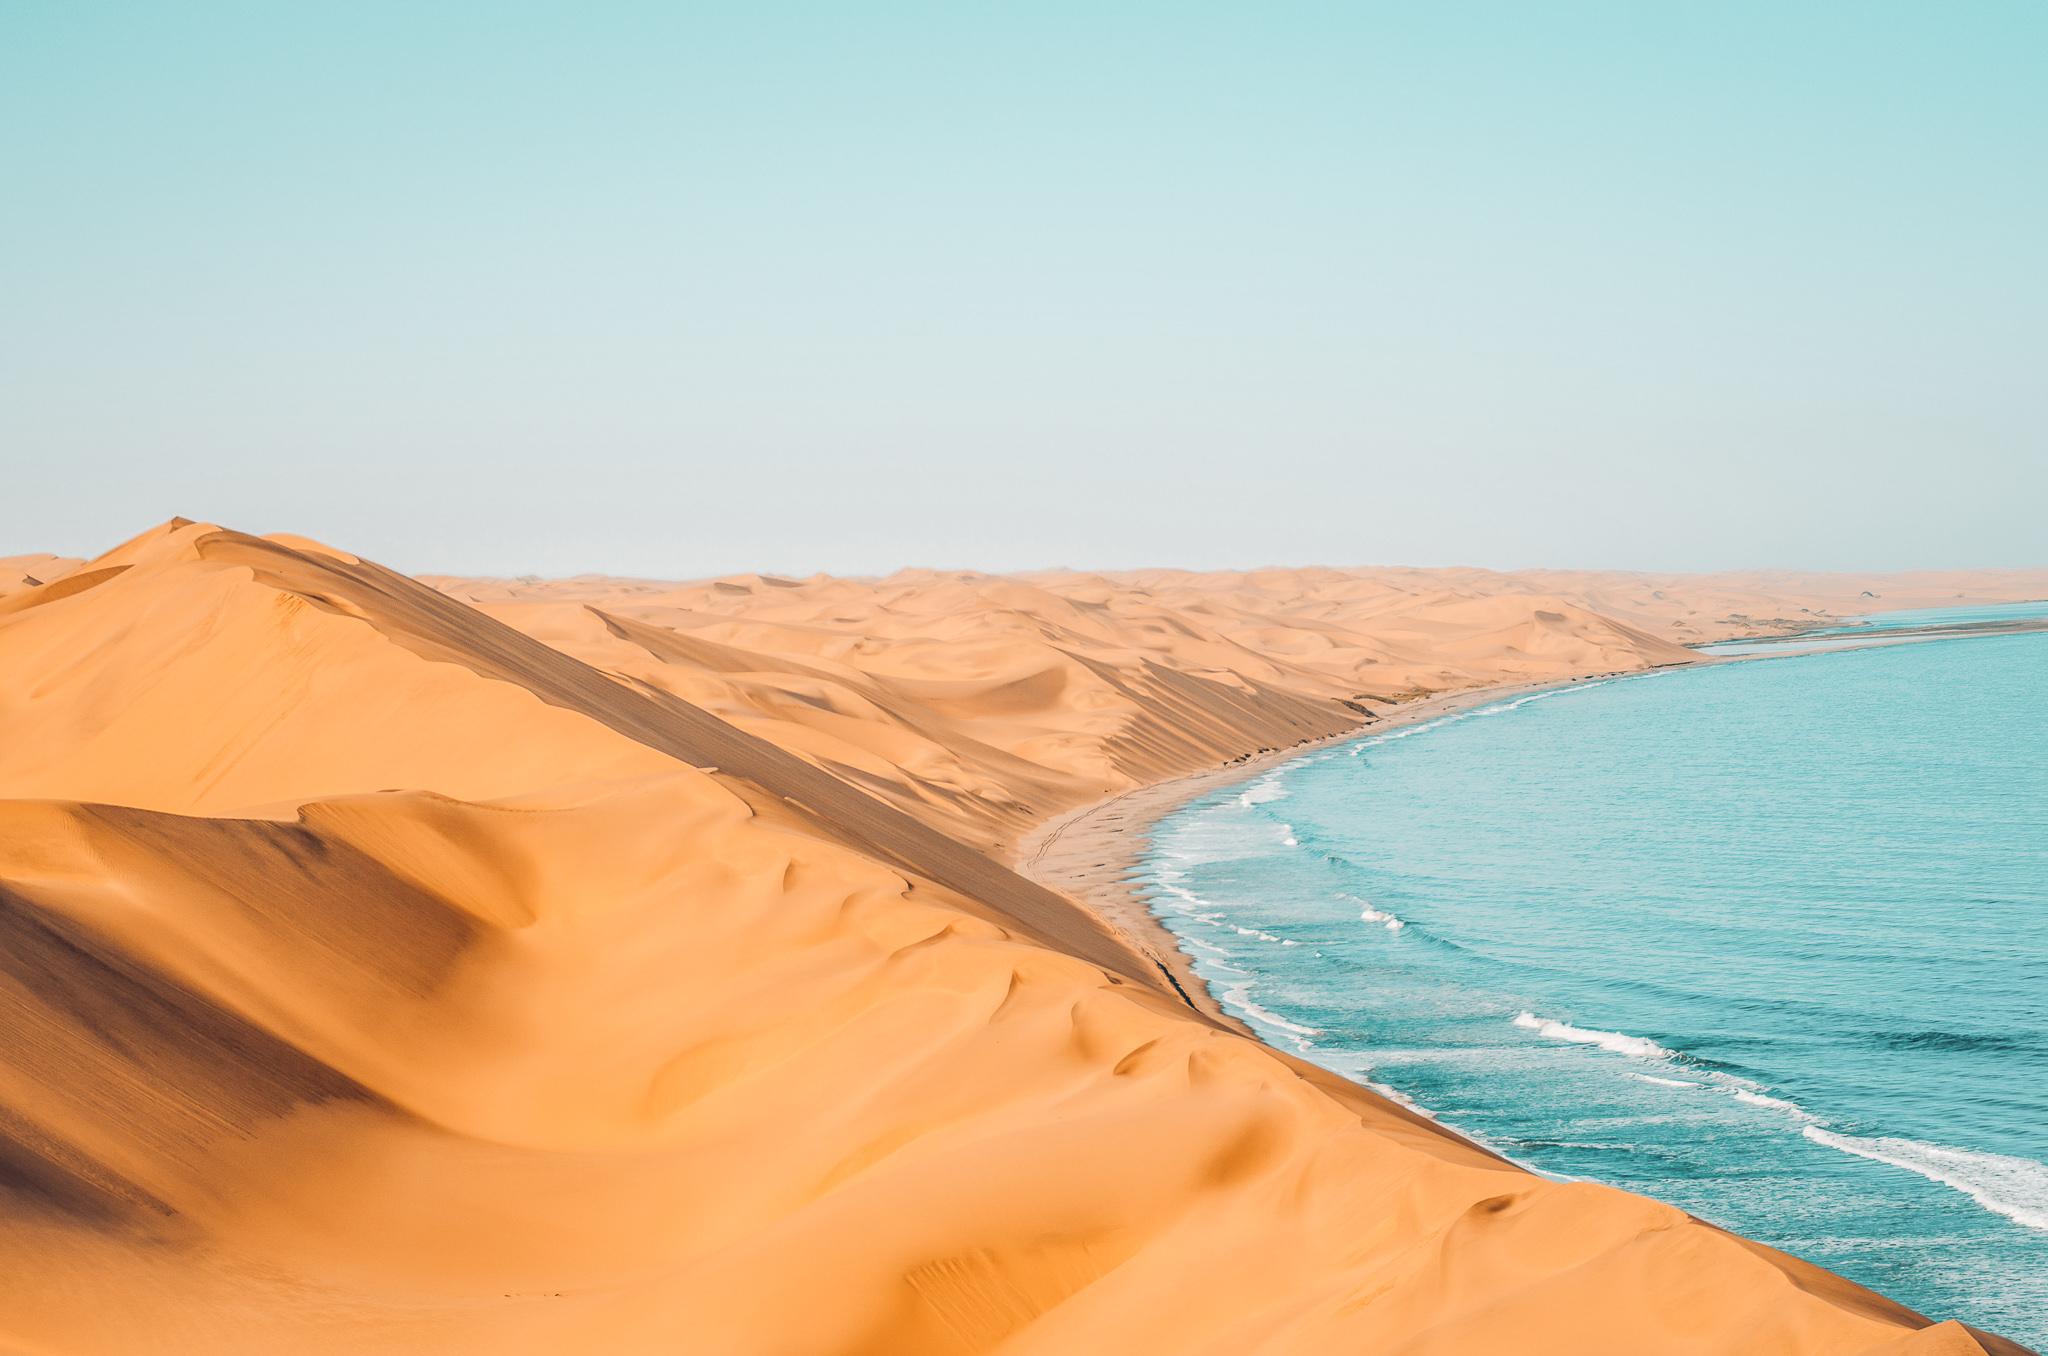 orange sand dunes touching the blue ocean below